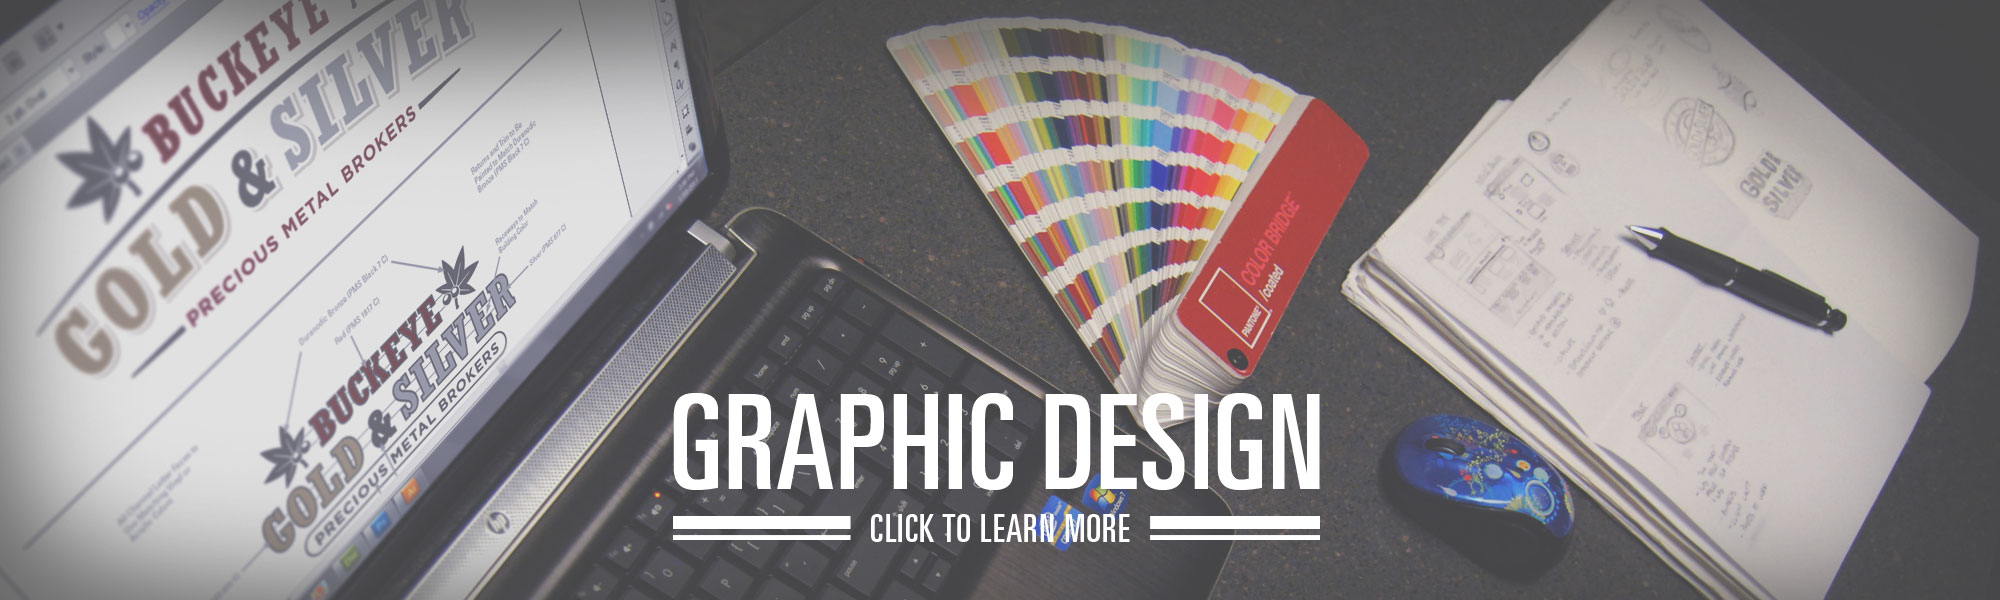 Graphic Design - Branding and Graphic Design